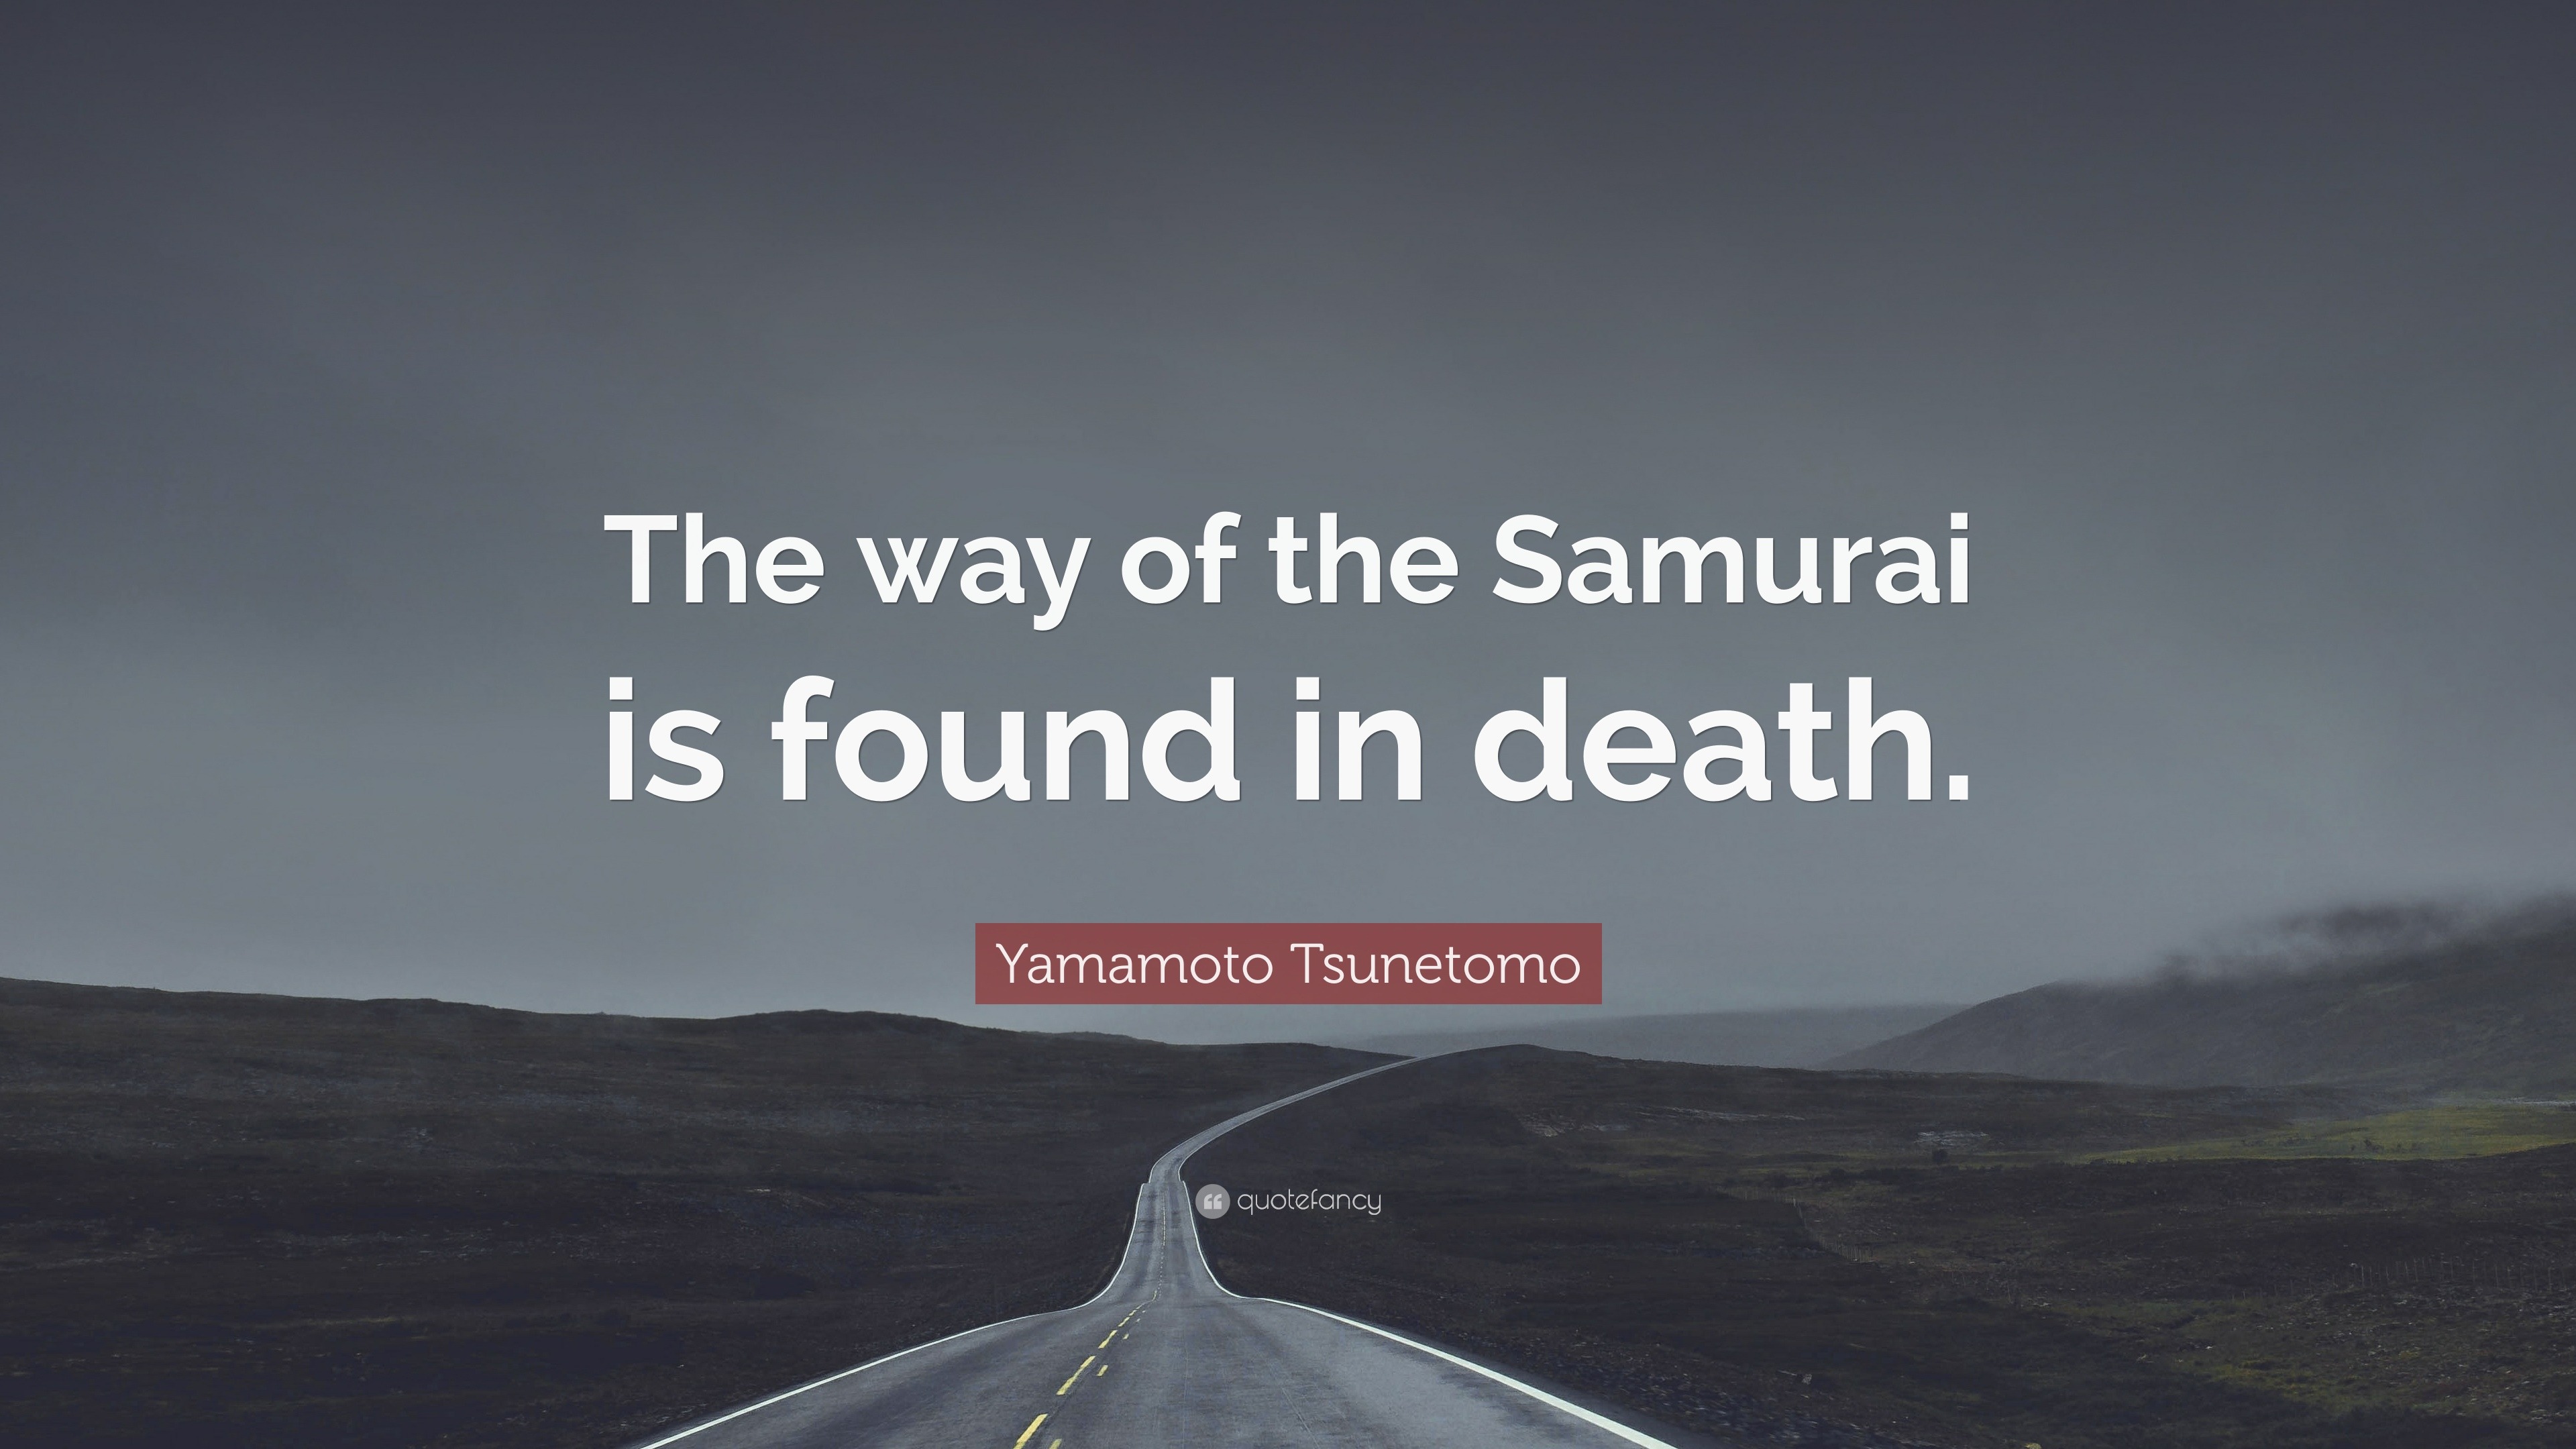 Yamamoto Tsunetomo Quote: “The way